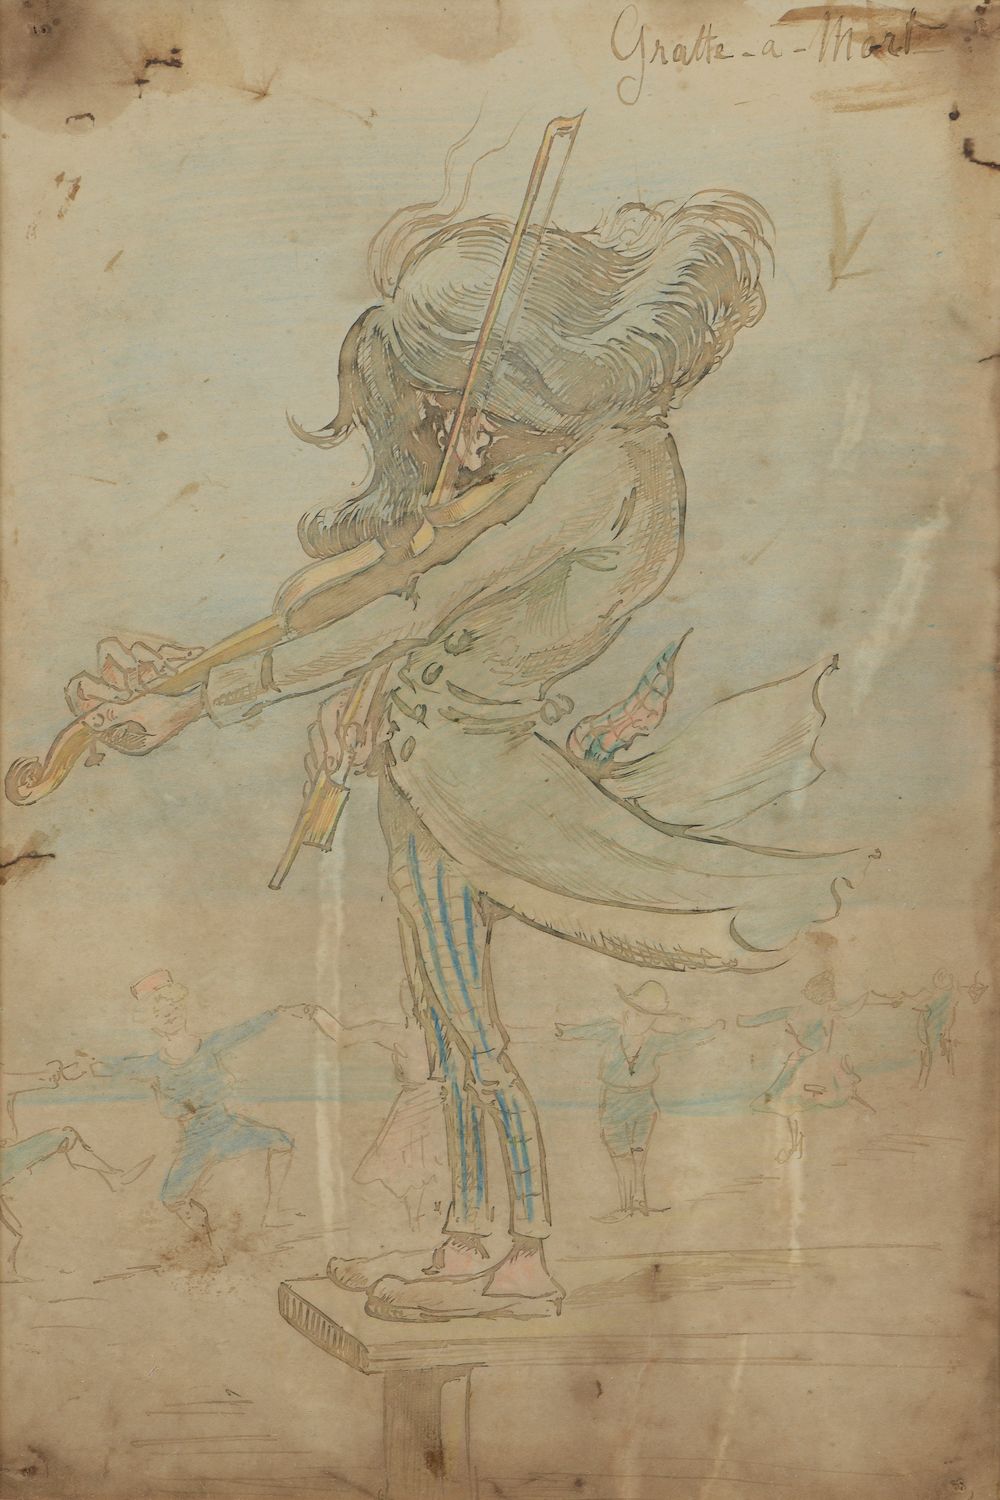 Null 乔治-梅里埃斯（巴黎，1861-1938）。

"Gratte-à-mort"。

用彩色铅笔加高的水墨漫画，主角是一位小提琴手（针孔，污渍，潮湿）。&hellip;